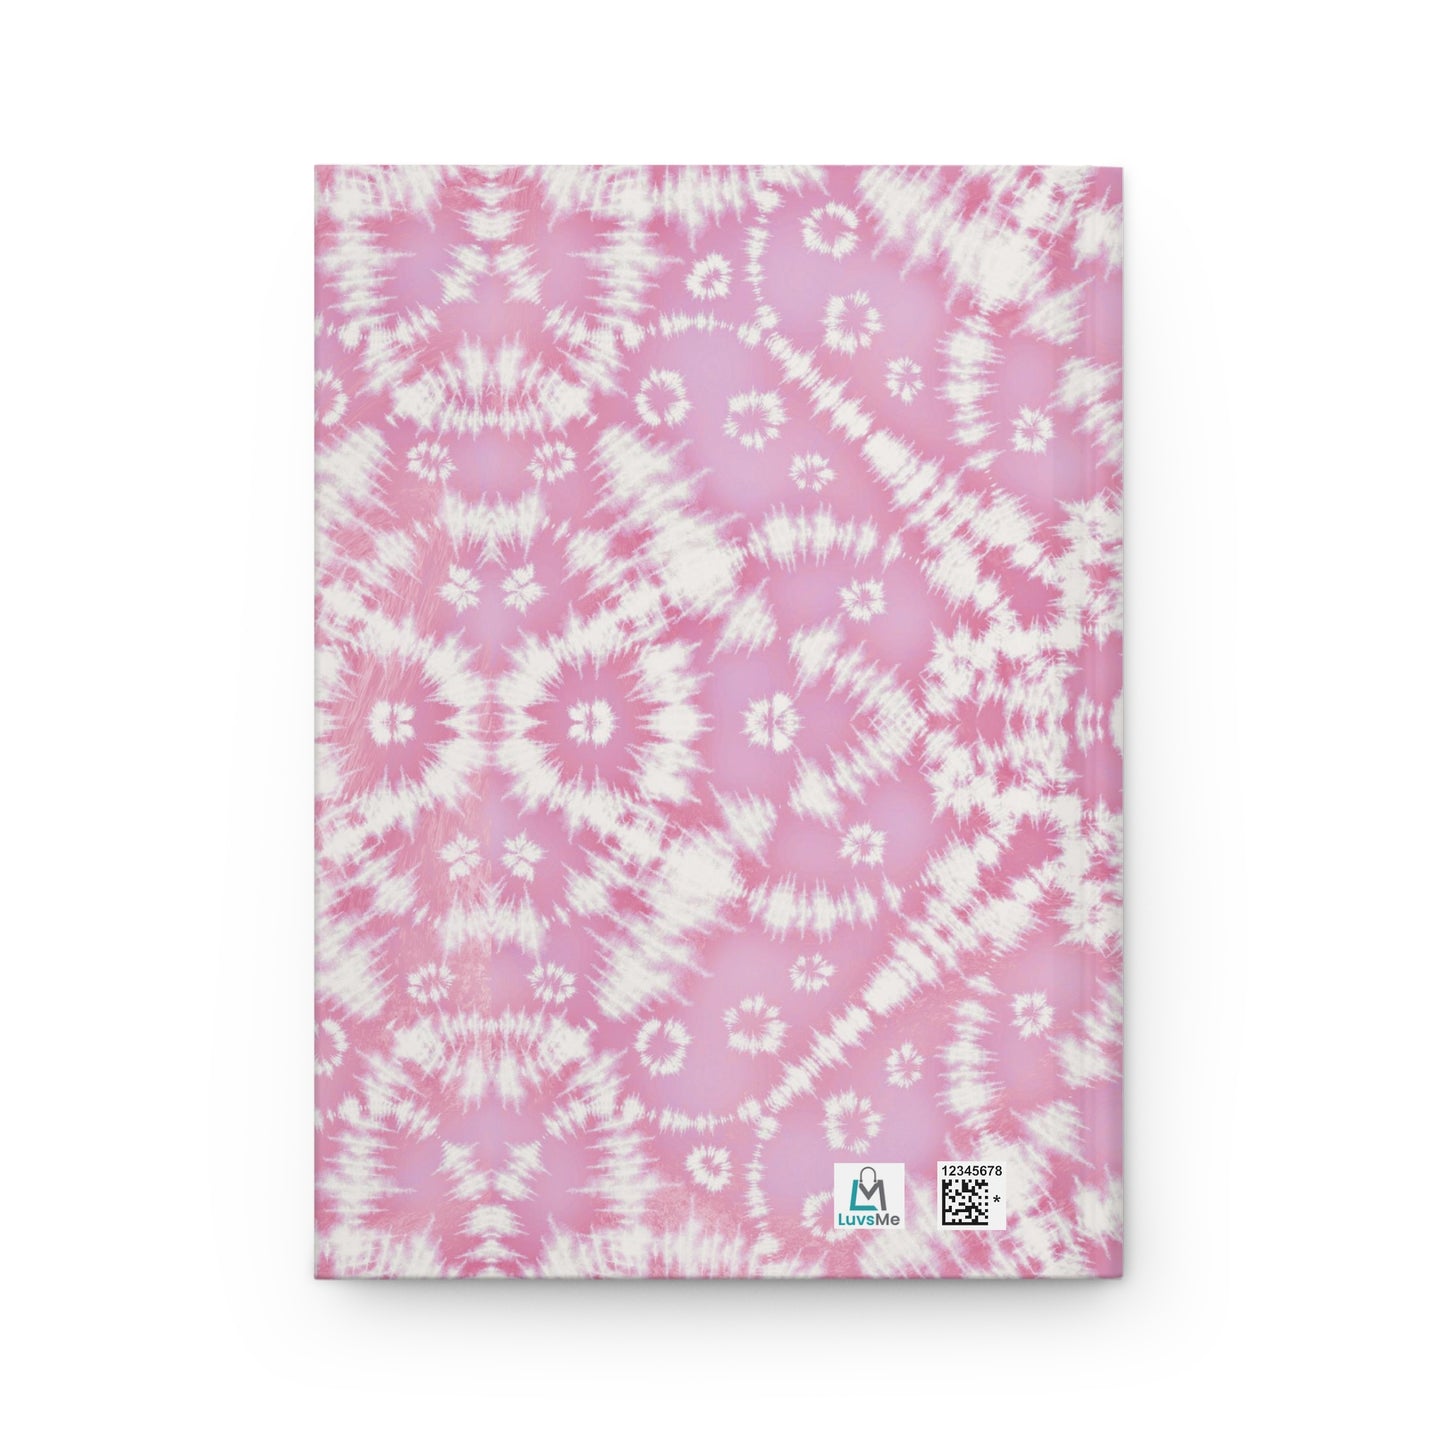 She Designed the Life She Loved - Light Pink Batik - Hardcover Lined Journal Matte